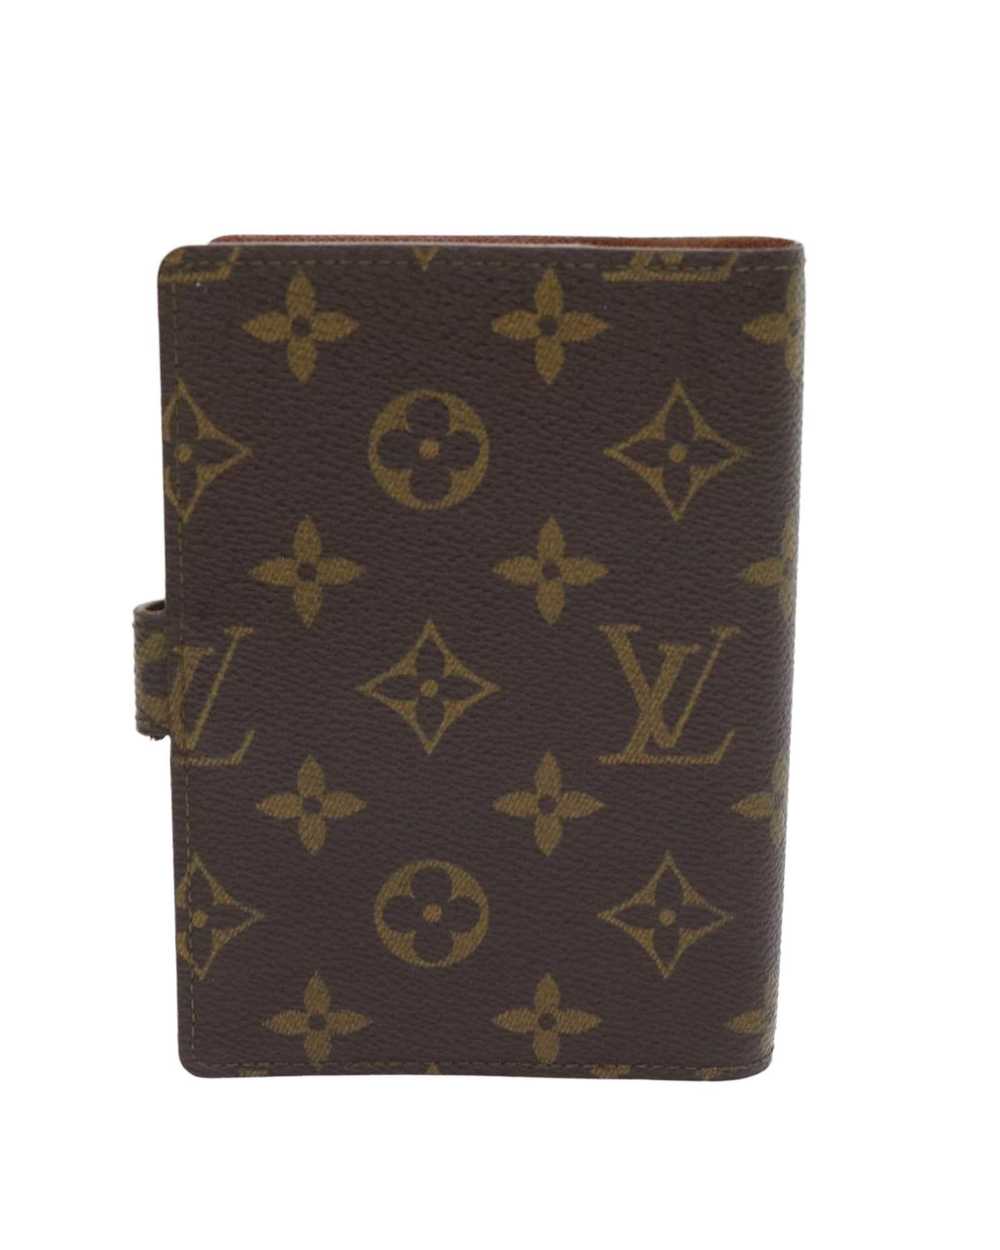 Louis Vuitton Monogram Canvas Diary Cover - image 3